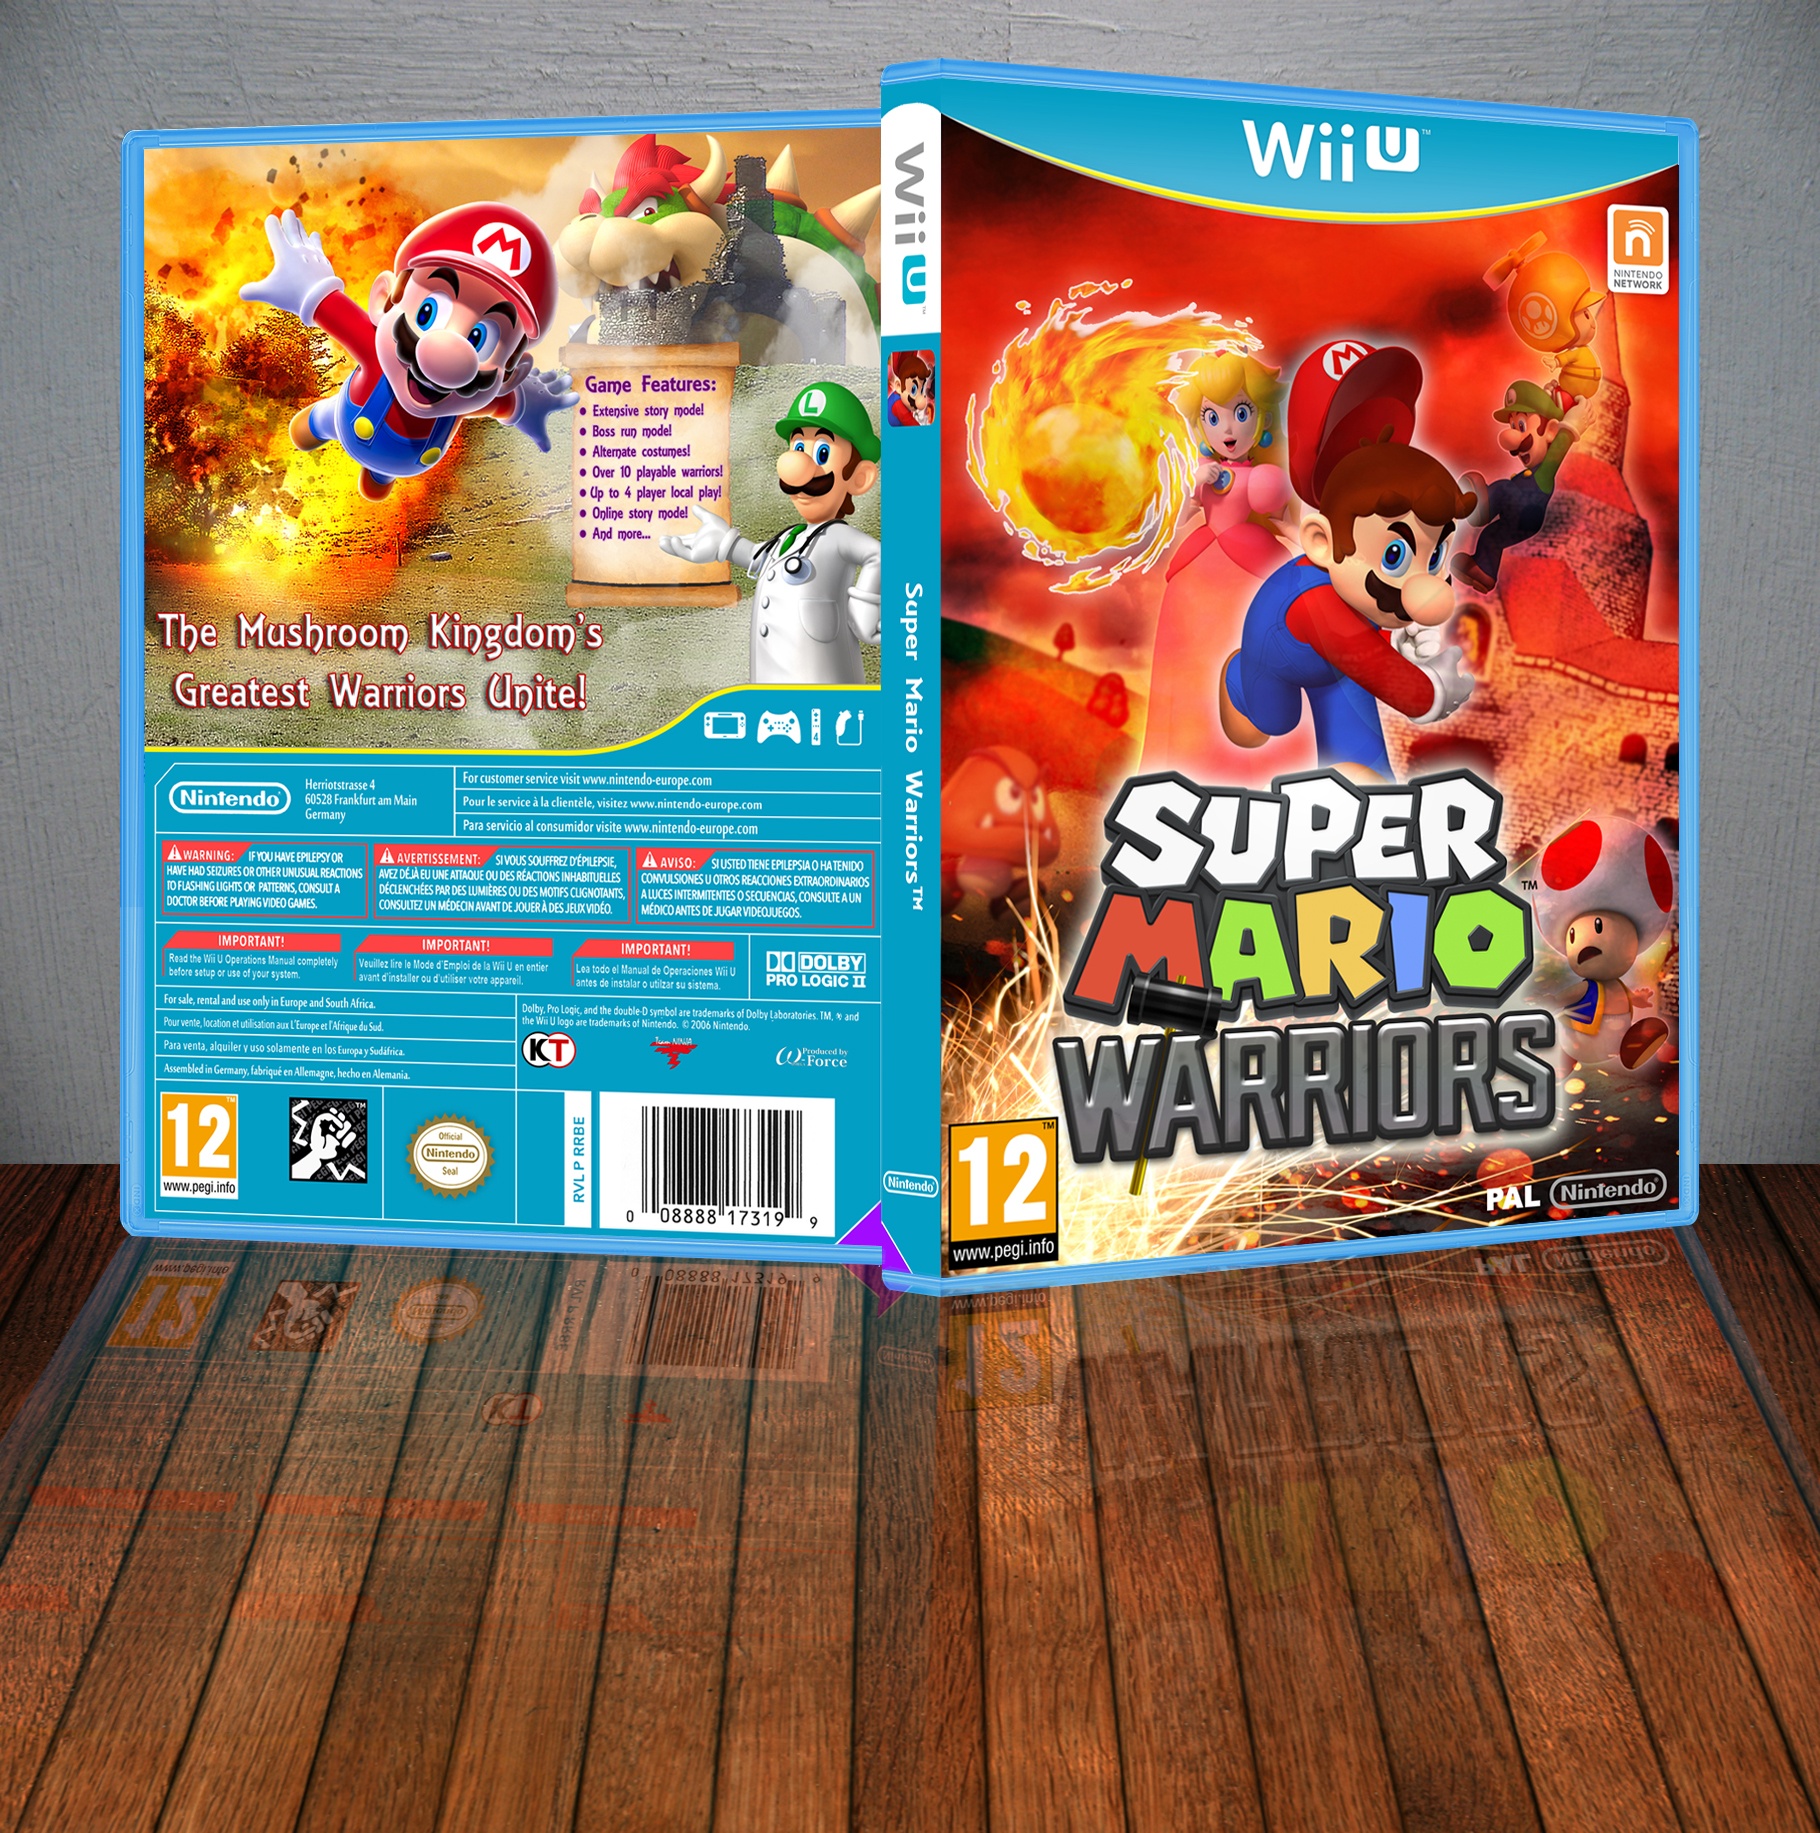 Super Mario Warriors box cover